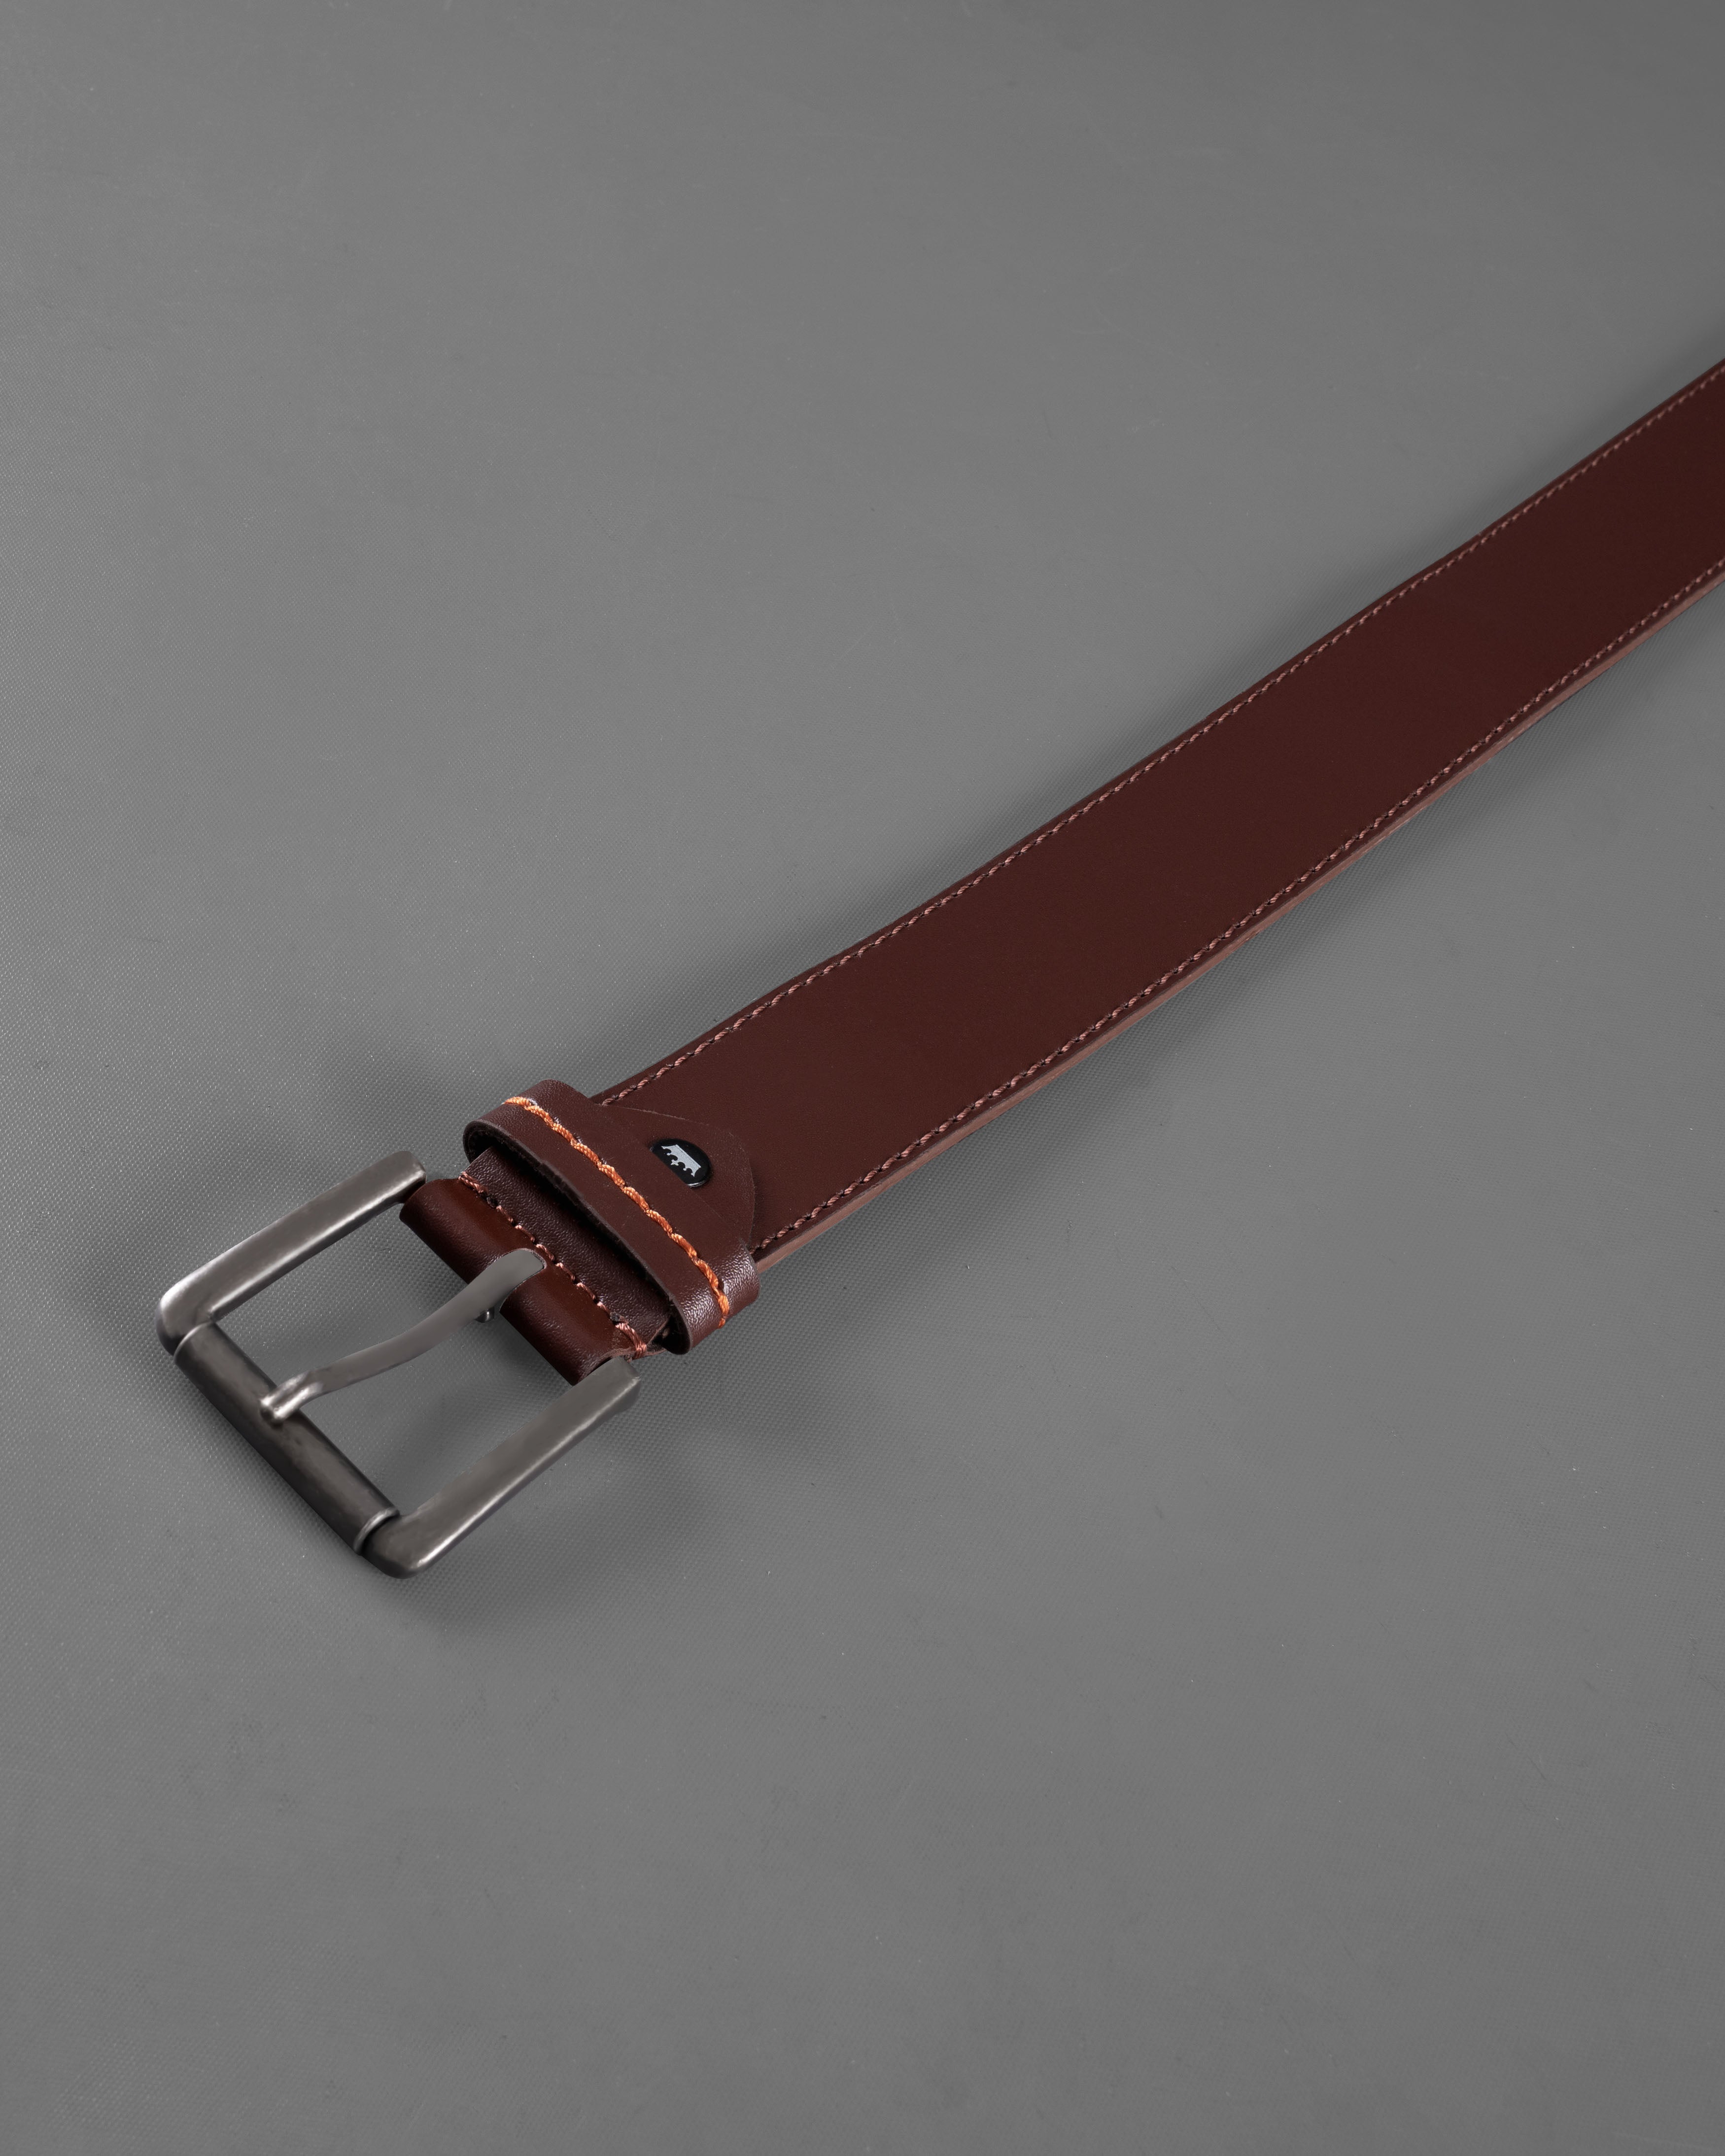 Tan Brown with Metallic Buckle Leather Free Lightweight Handcrafted Belt BT107-28, BT107-30, BT107-32, BT107-34, BT107-36, BT107-38